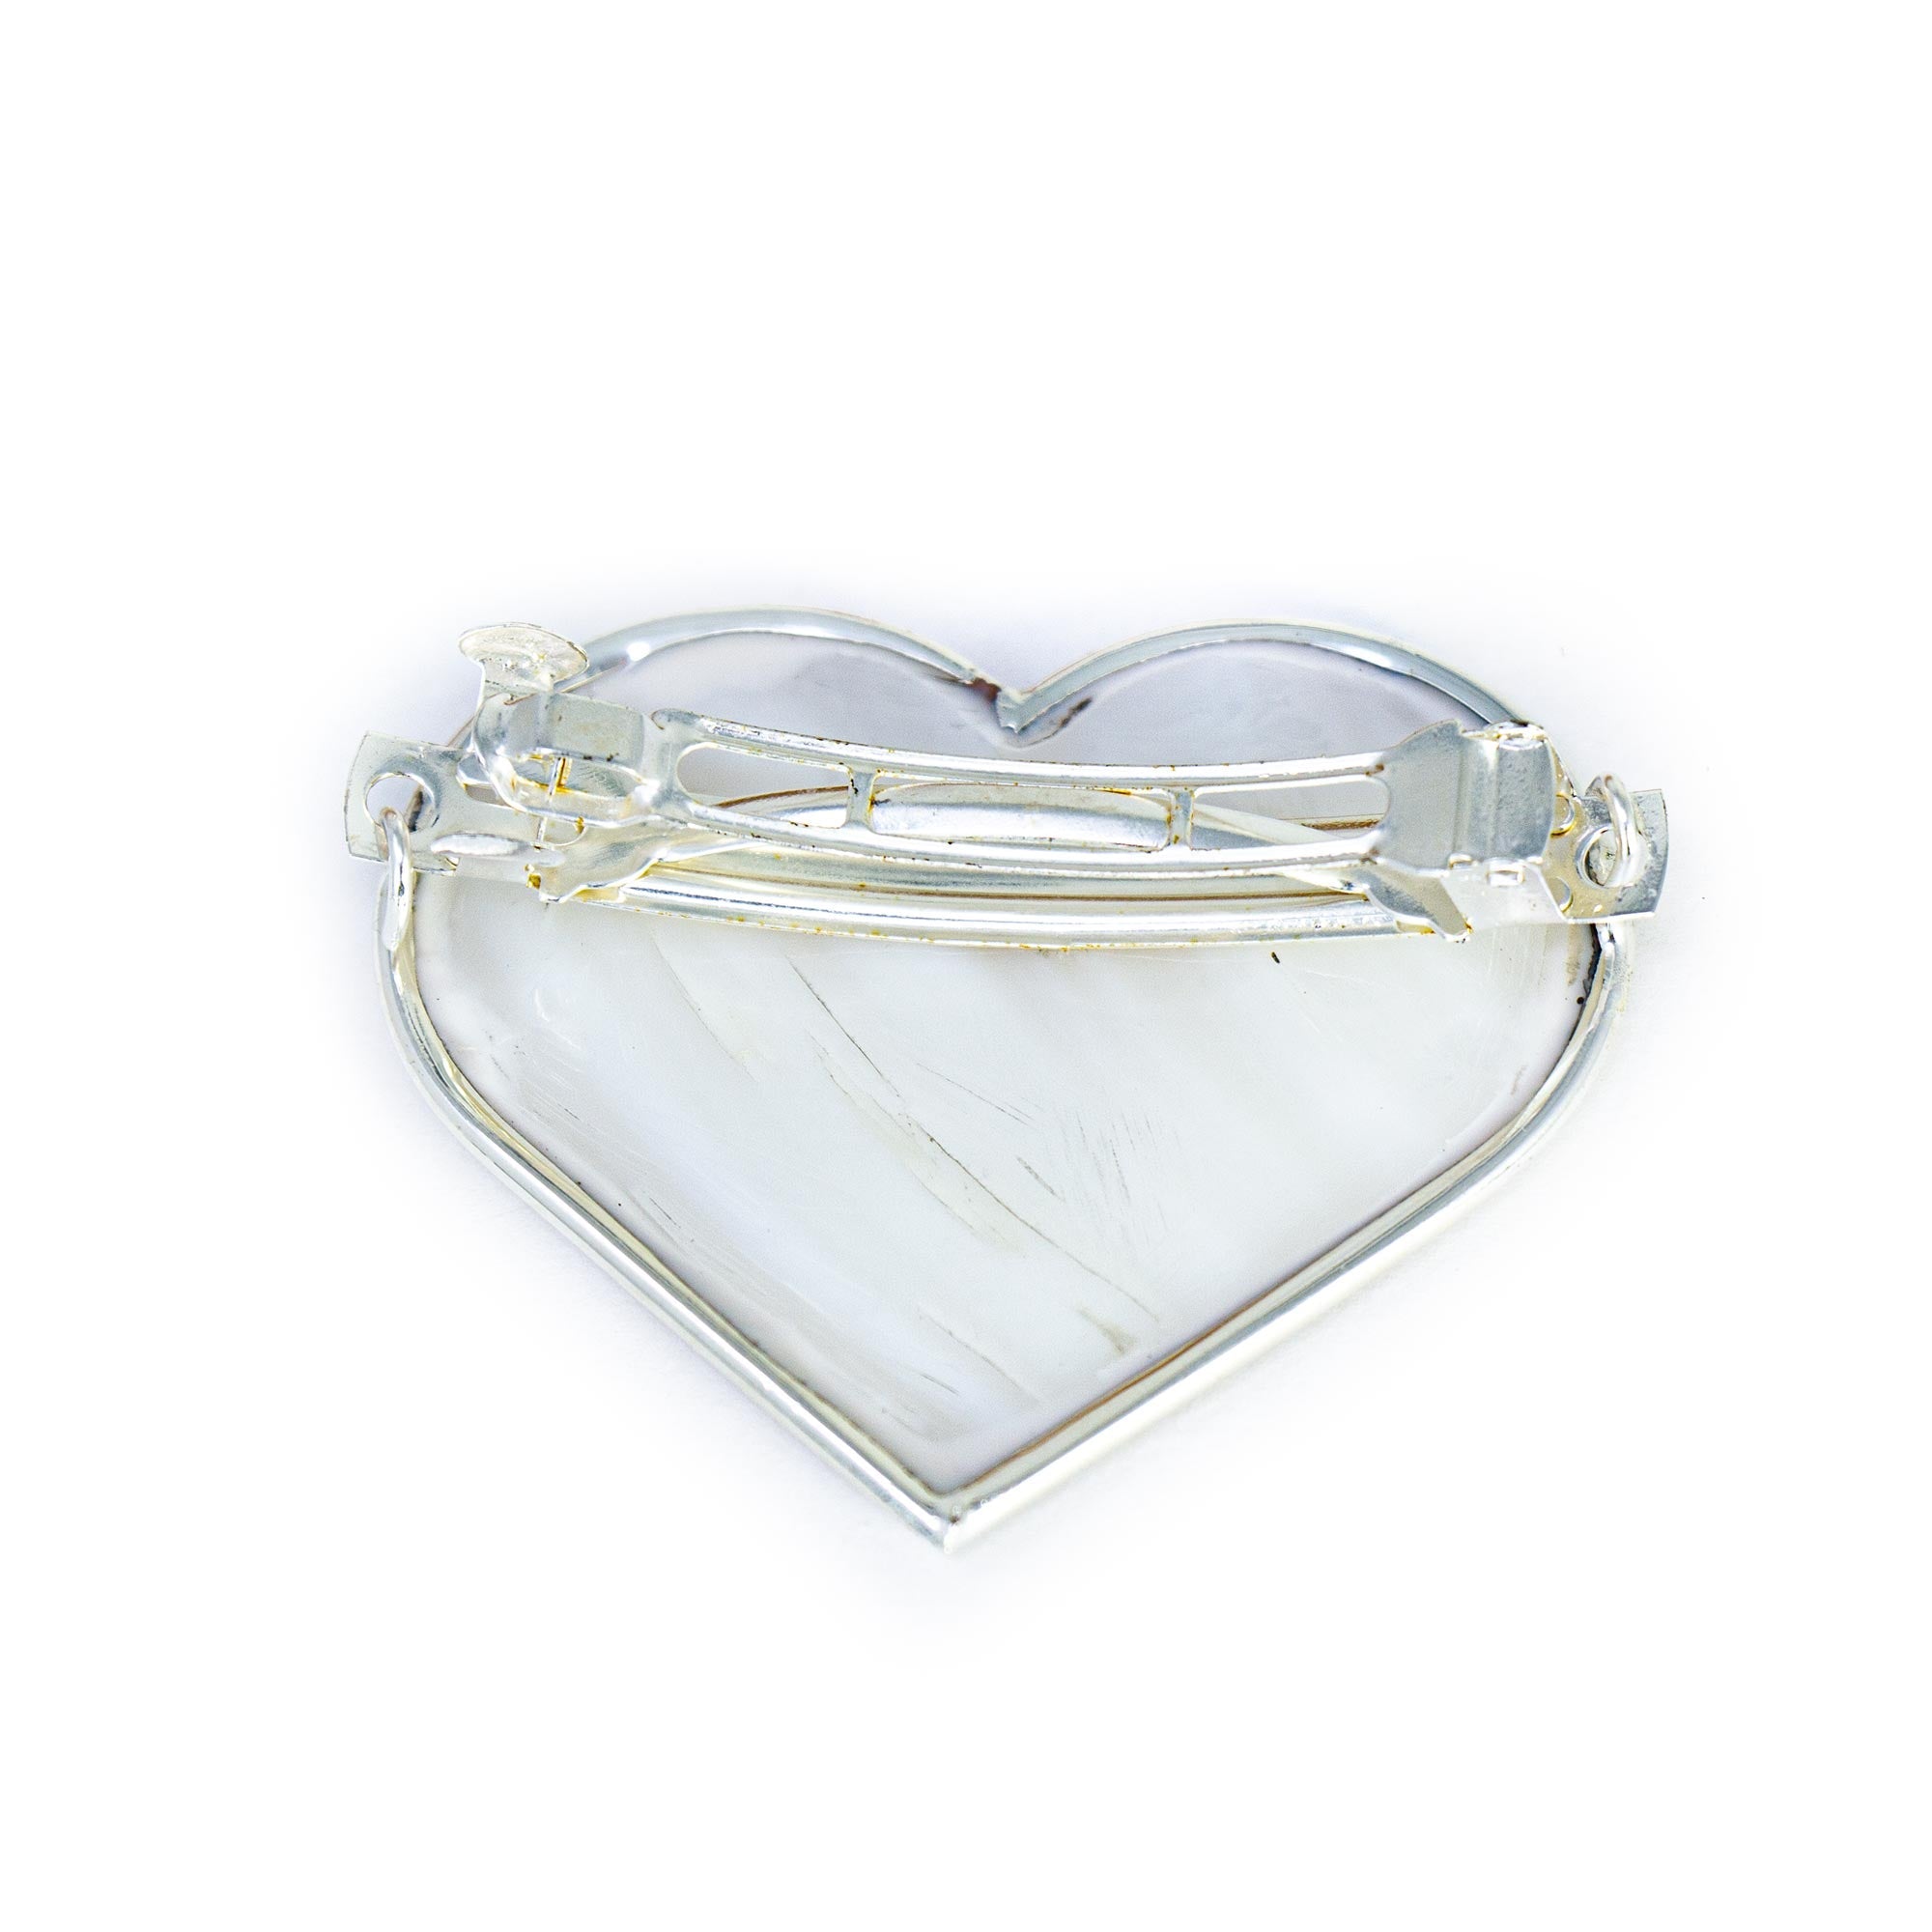 Angelco Accessories Shell heart hair clip